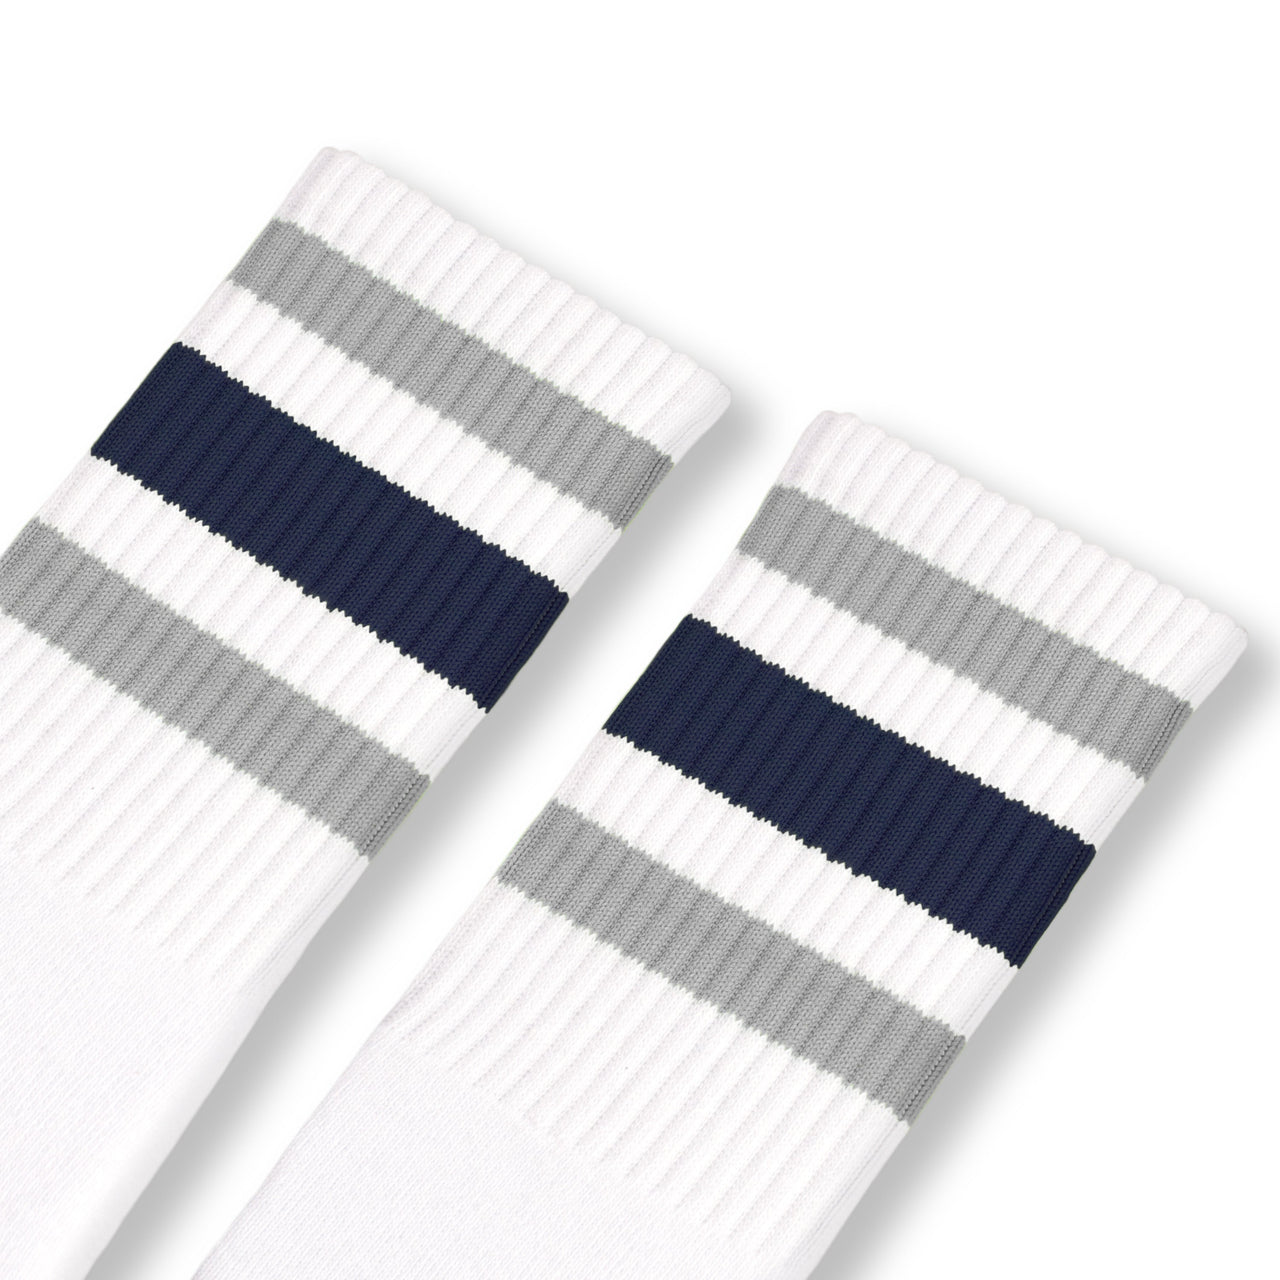 White w/ grey & navy stripes